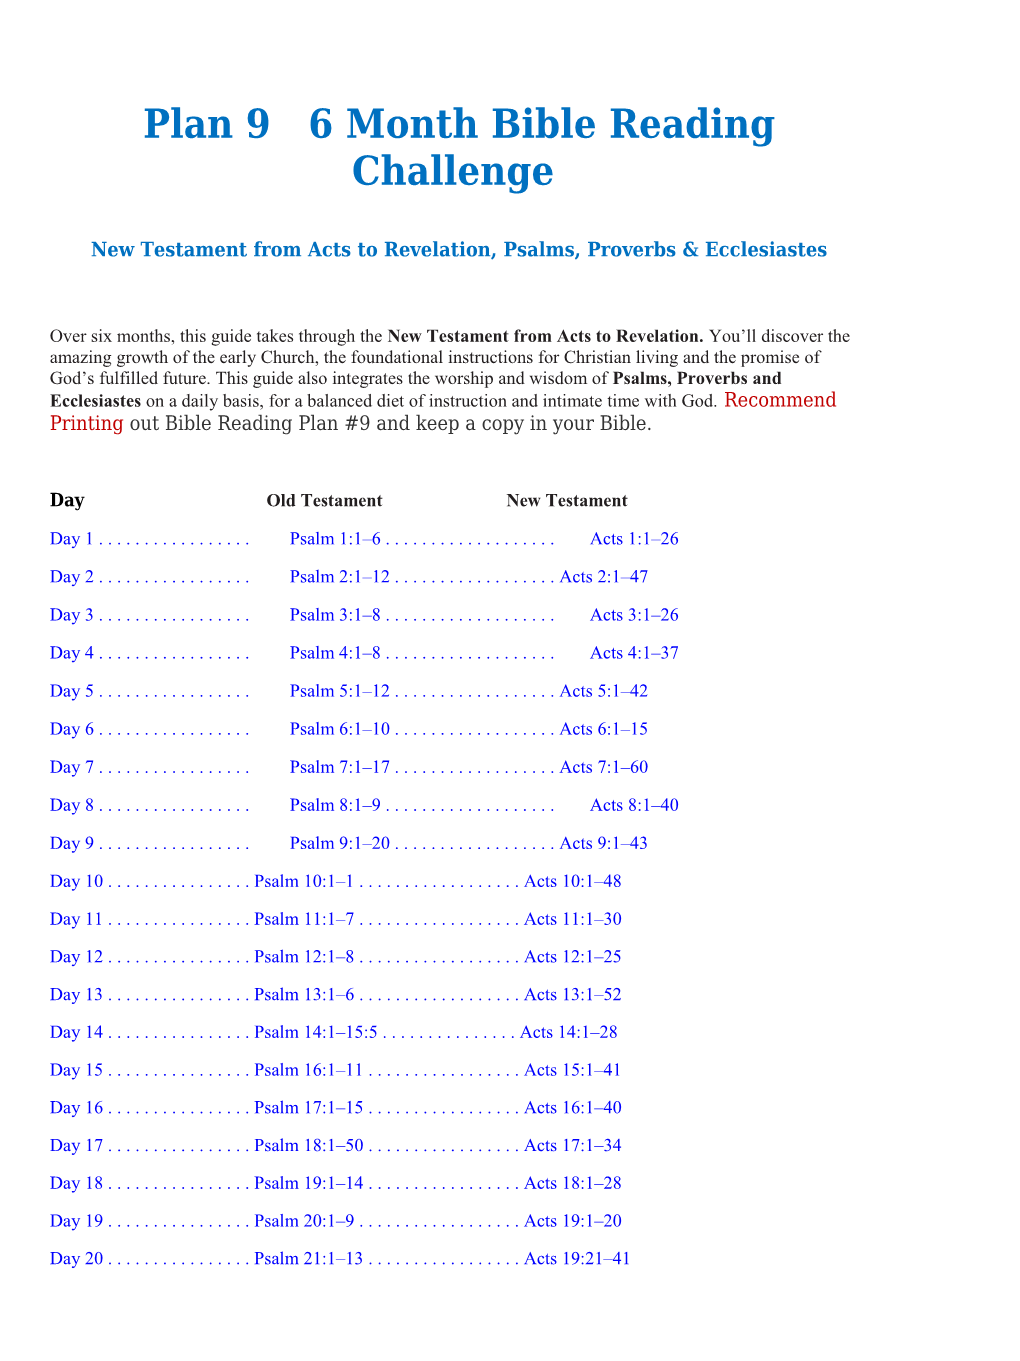 Plan 9 6 Month Bible Reading Challenge